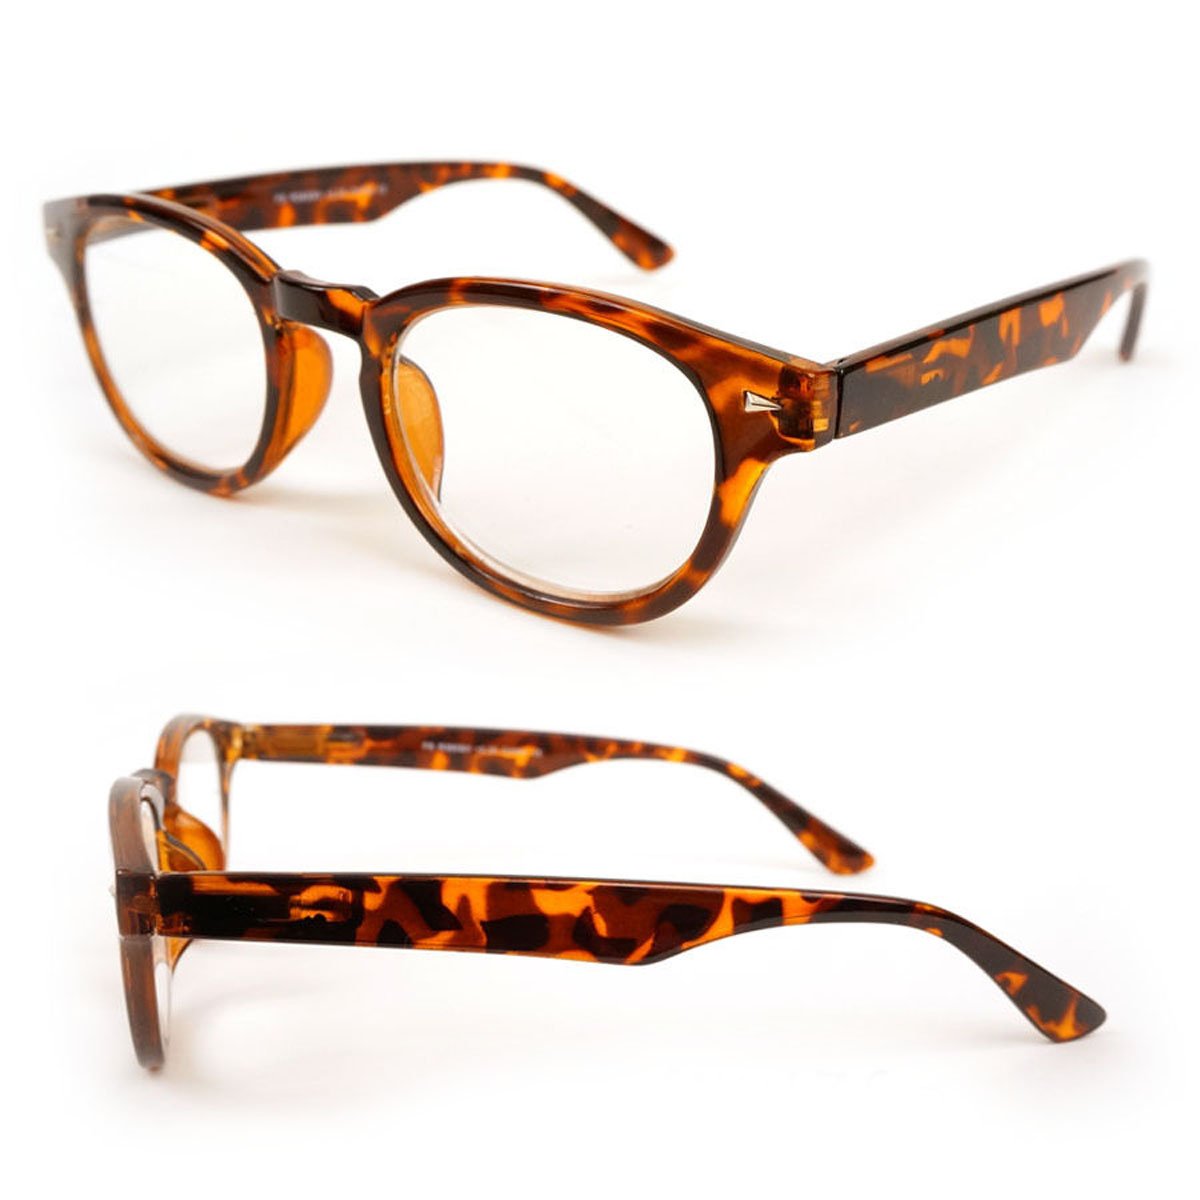 Medium Round Classic Frame Reading Glasses Geek Retro Vintage Style 100-375 - Brown, +1.75